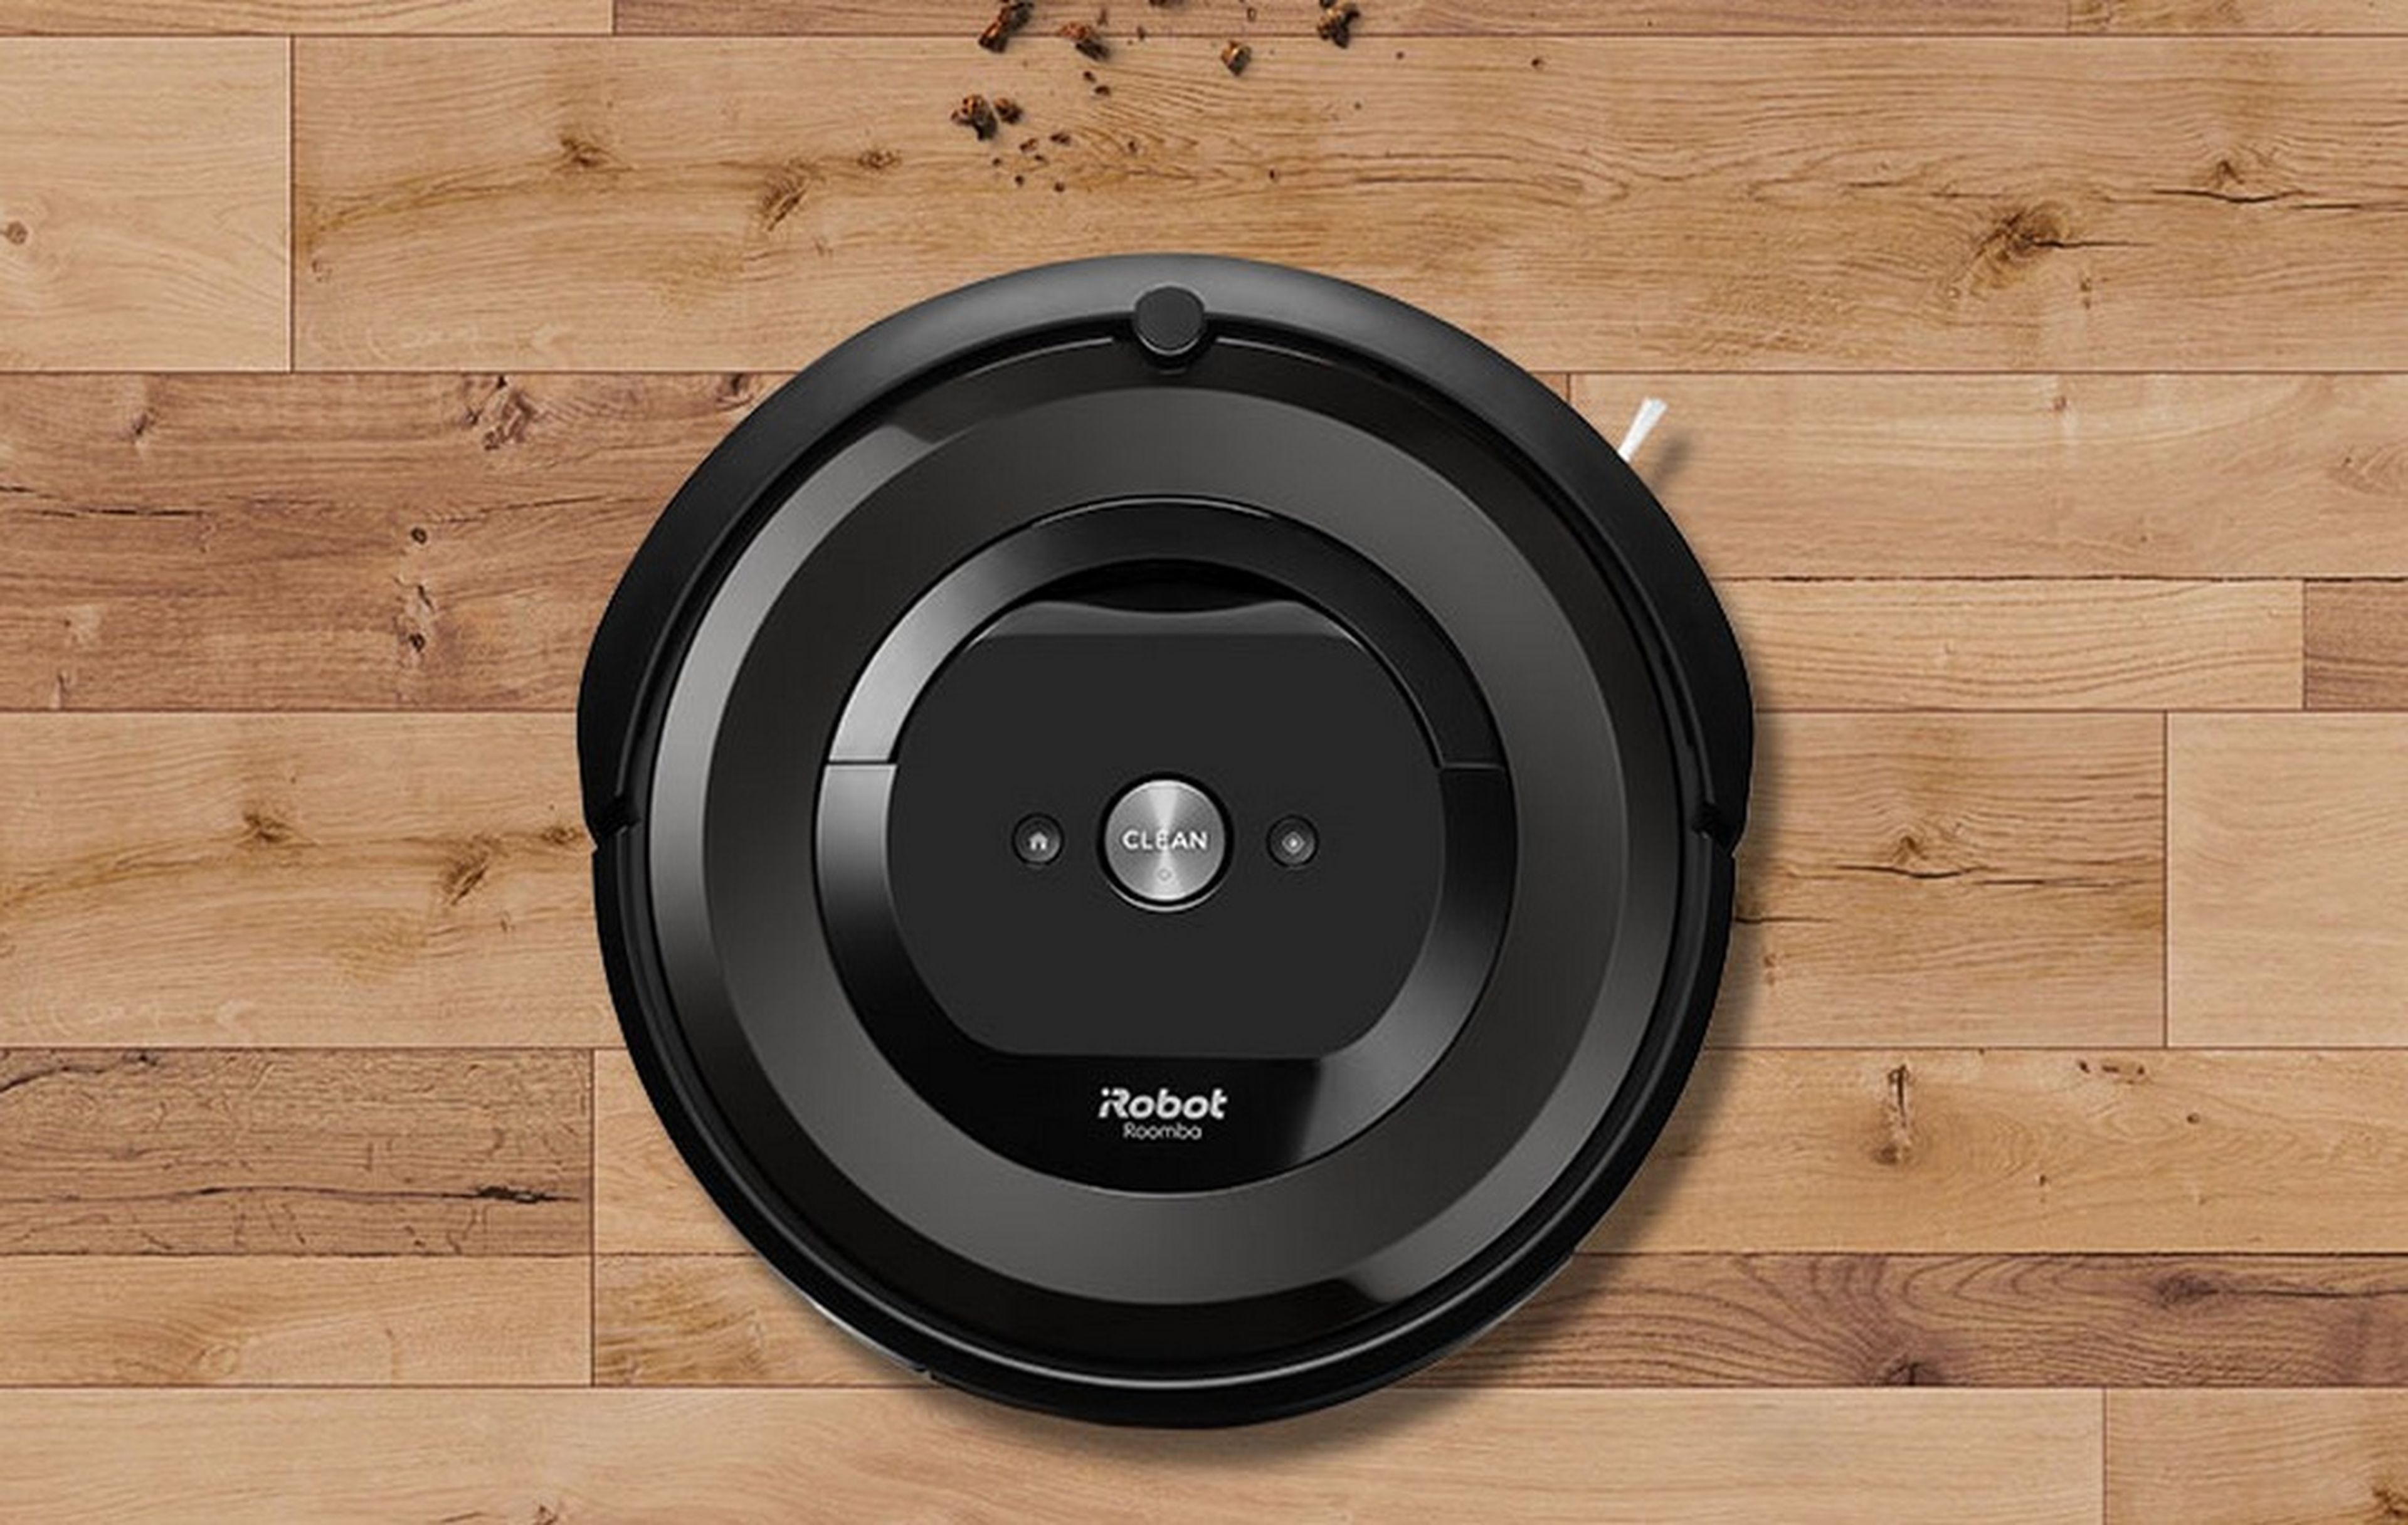 Robots aspirador Roomba hasta de descuento por Black Friday | Computer Hoy